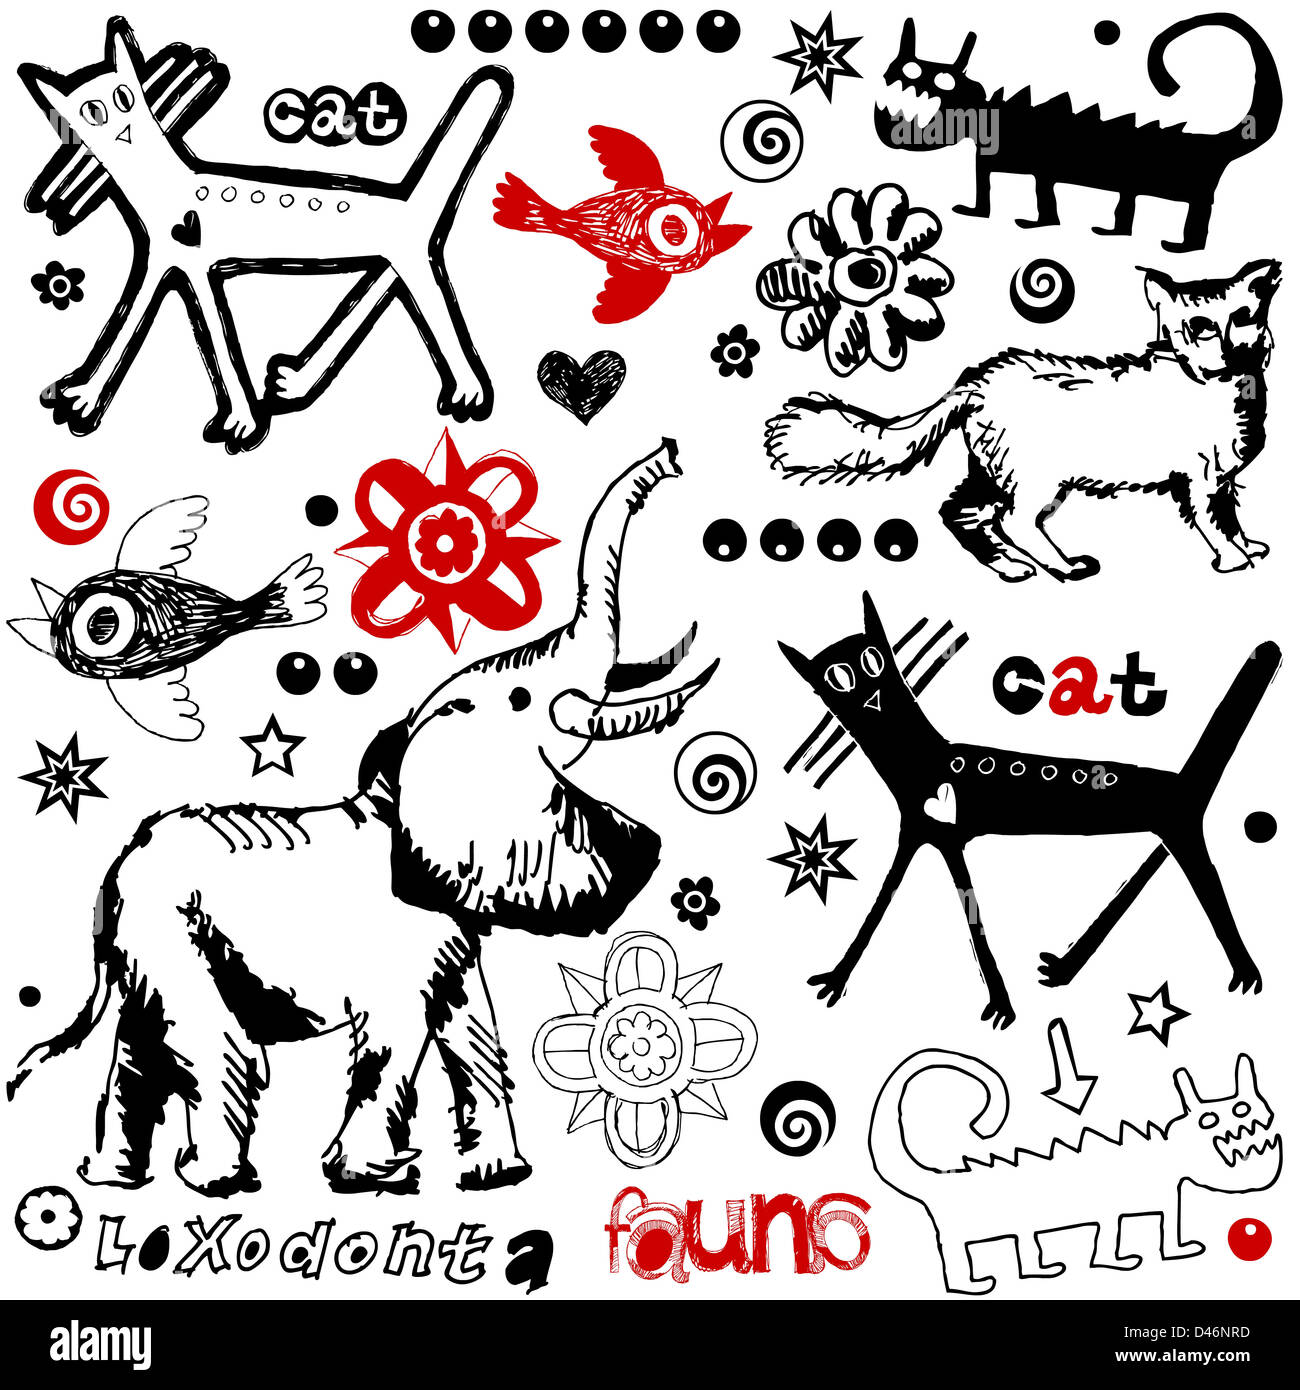 crazy animals, hand drawn design elements on white background Stock Photo